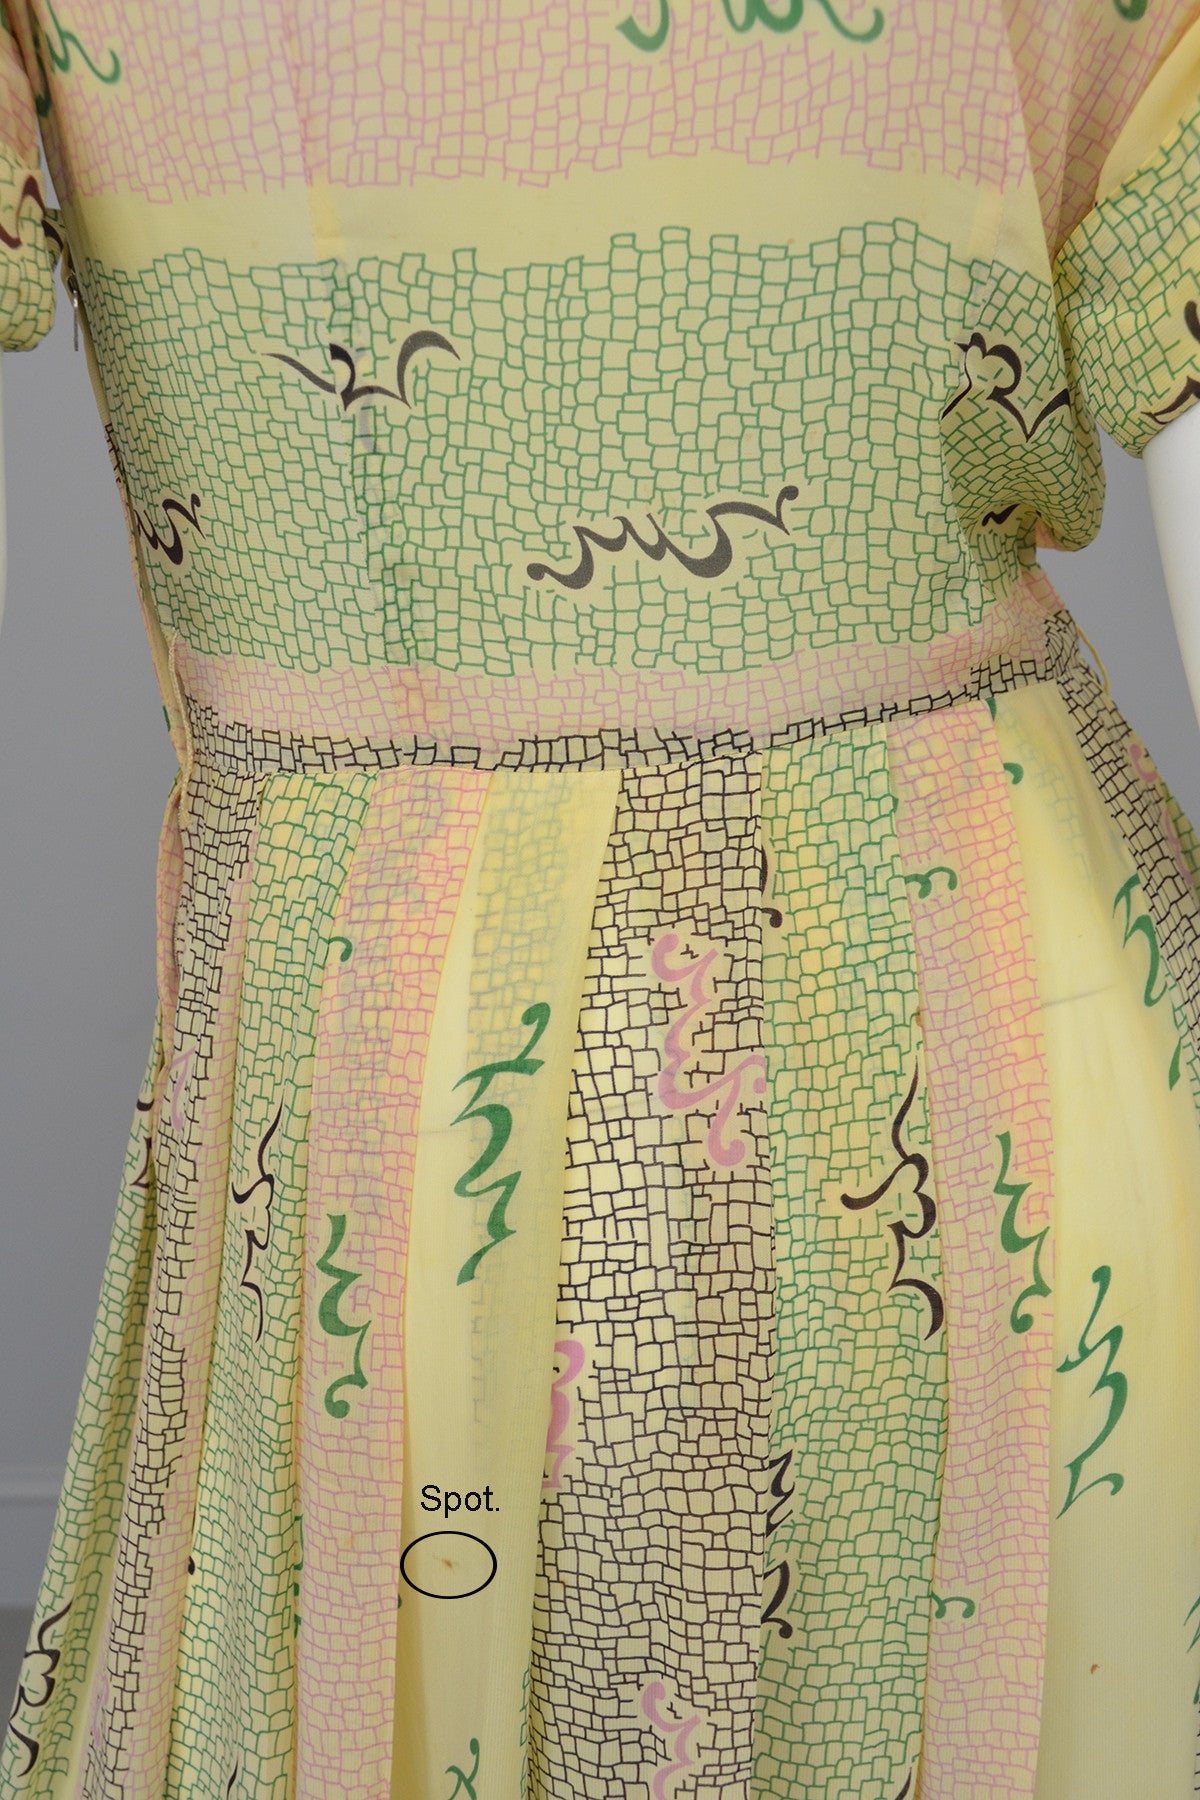 1940s Sketchy Novelty Print Spring Dress